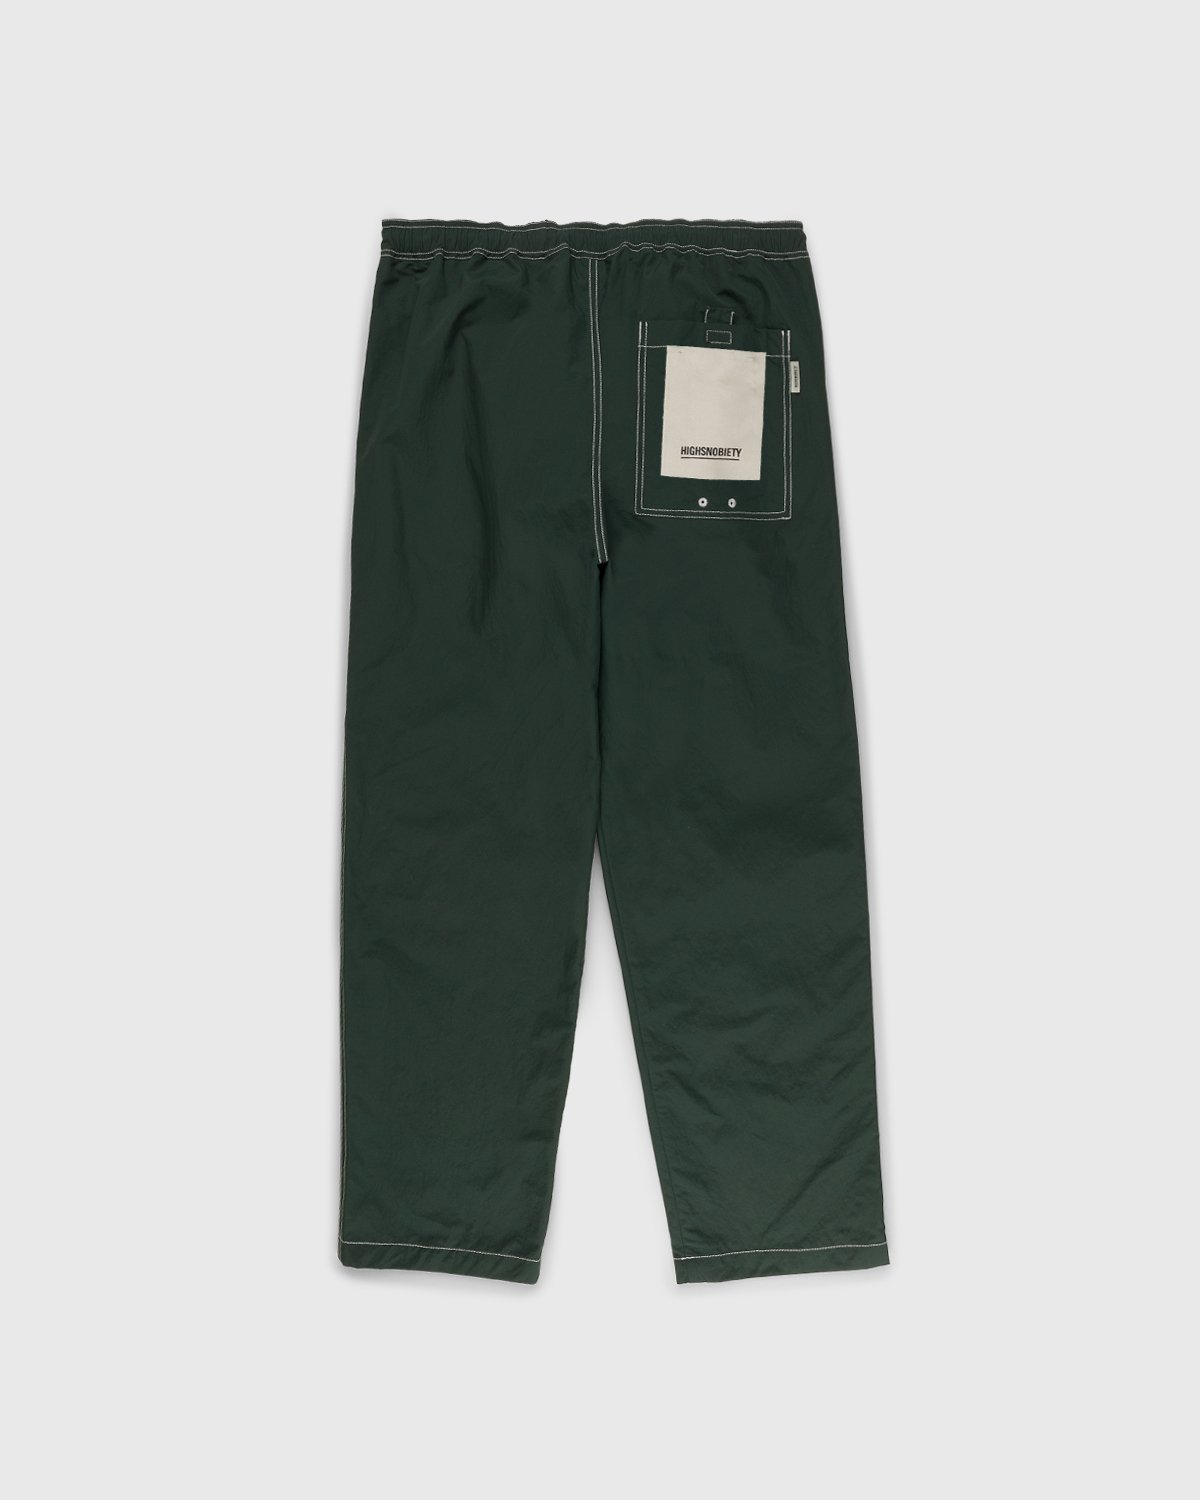 Highsnobiety - Contrast Brushed Nylon Elastic Pants Green - Clothing - Green - Image 2